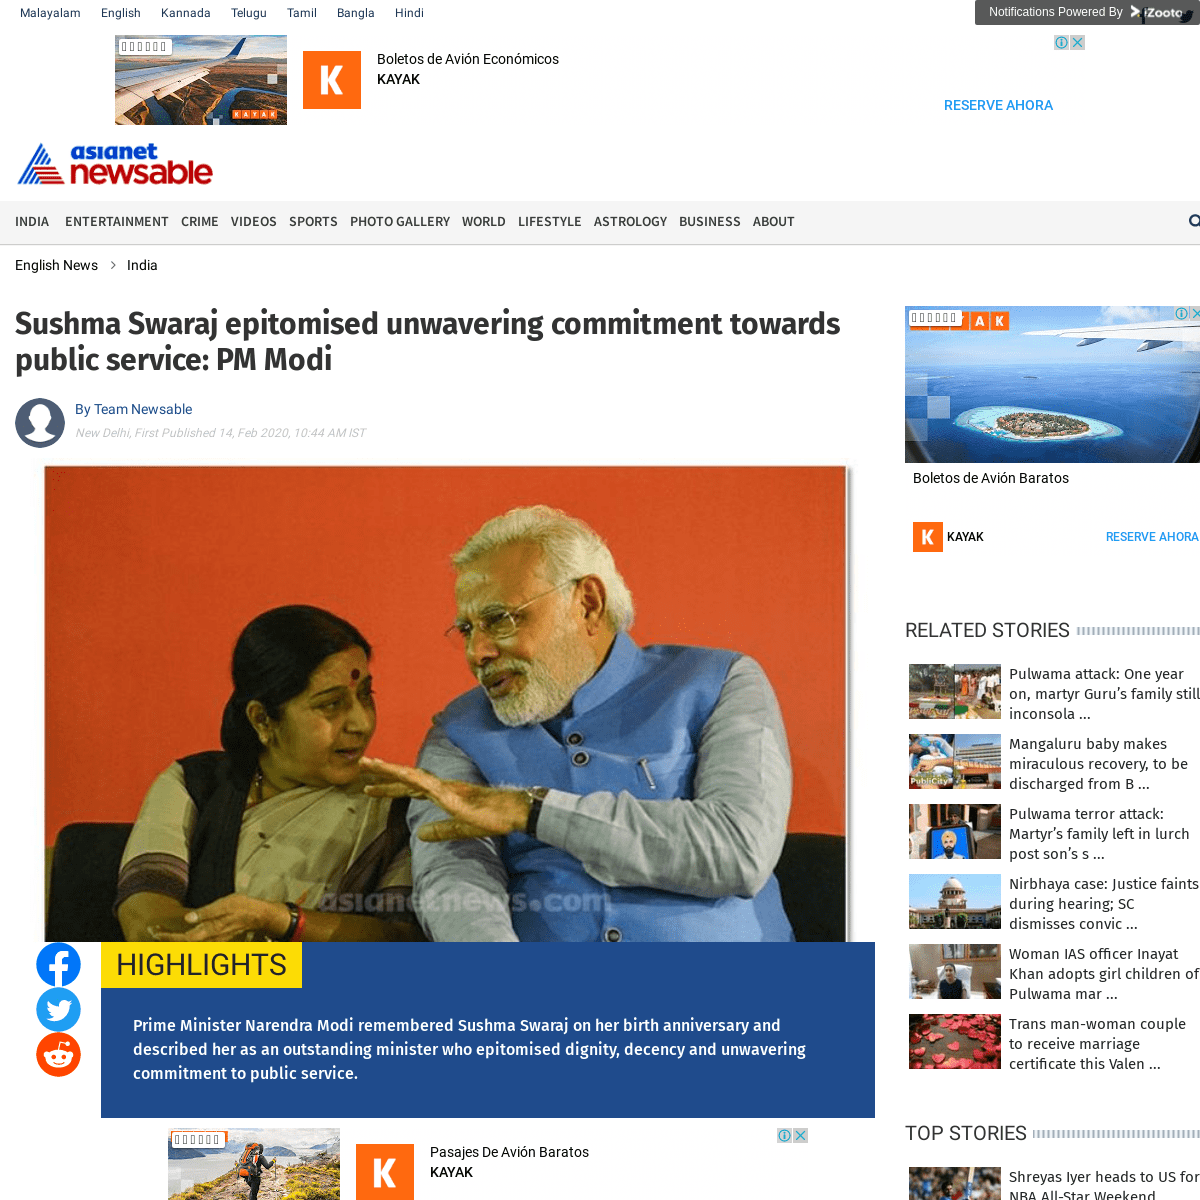 A complete backup of newsable.asianetnews.com/india/sushma-swaraj-epitomised-unwavering-commitment-towards-public-service-pm-mod